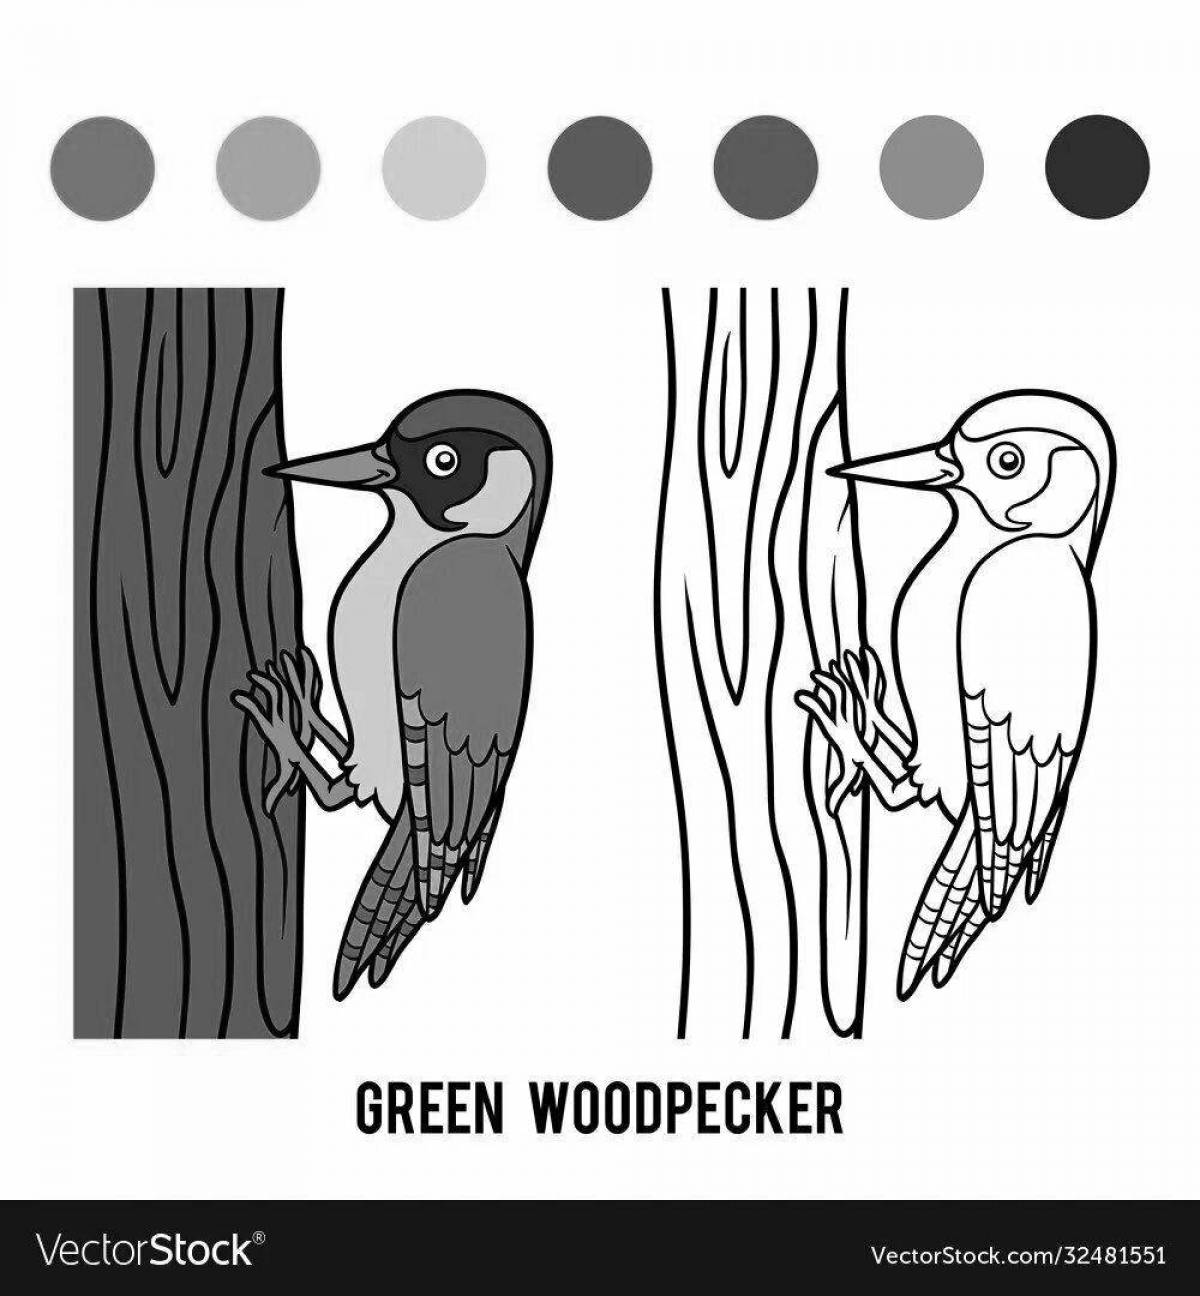 Coloring book attractive figurine woodpecker